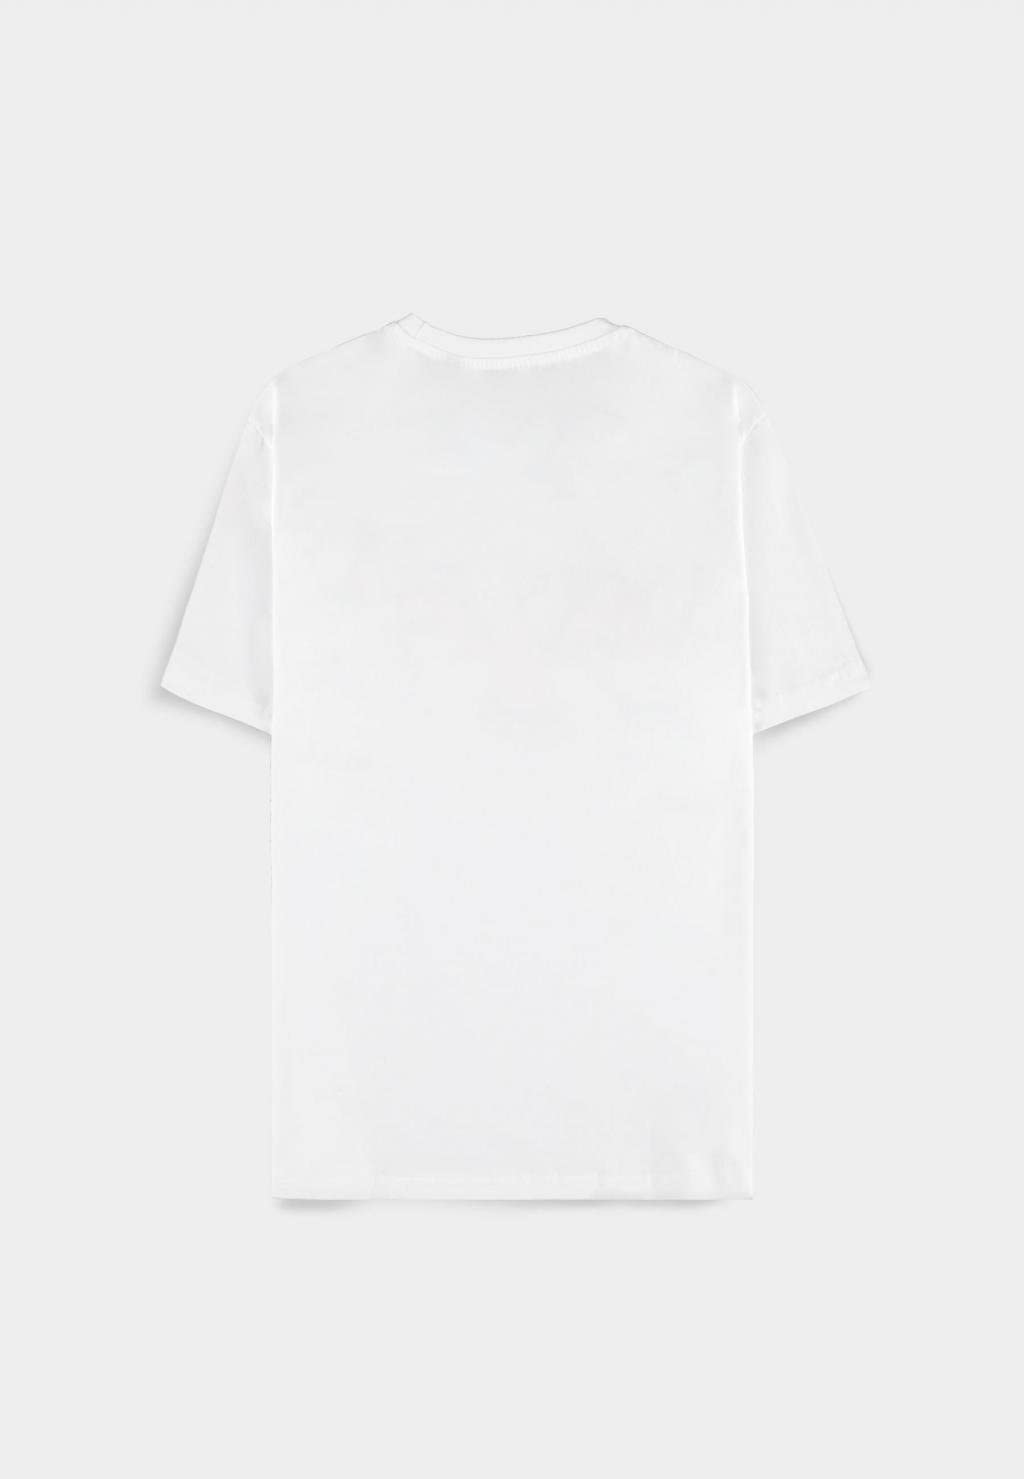 POKEMON - Dracaufeu #006 - T-Shirt Homme (S)